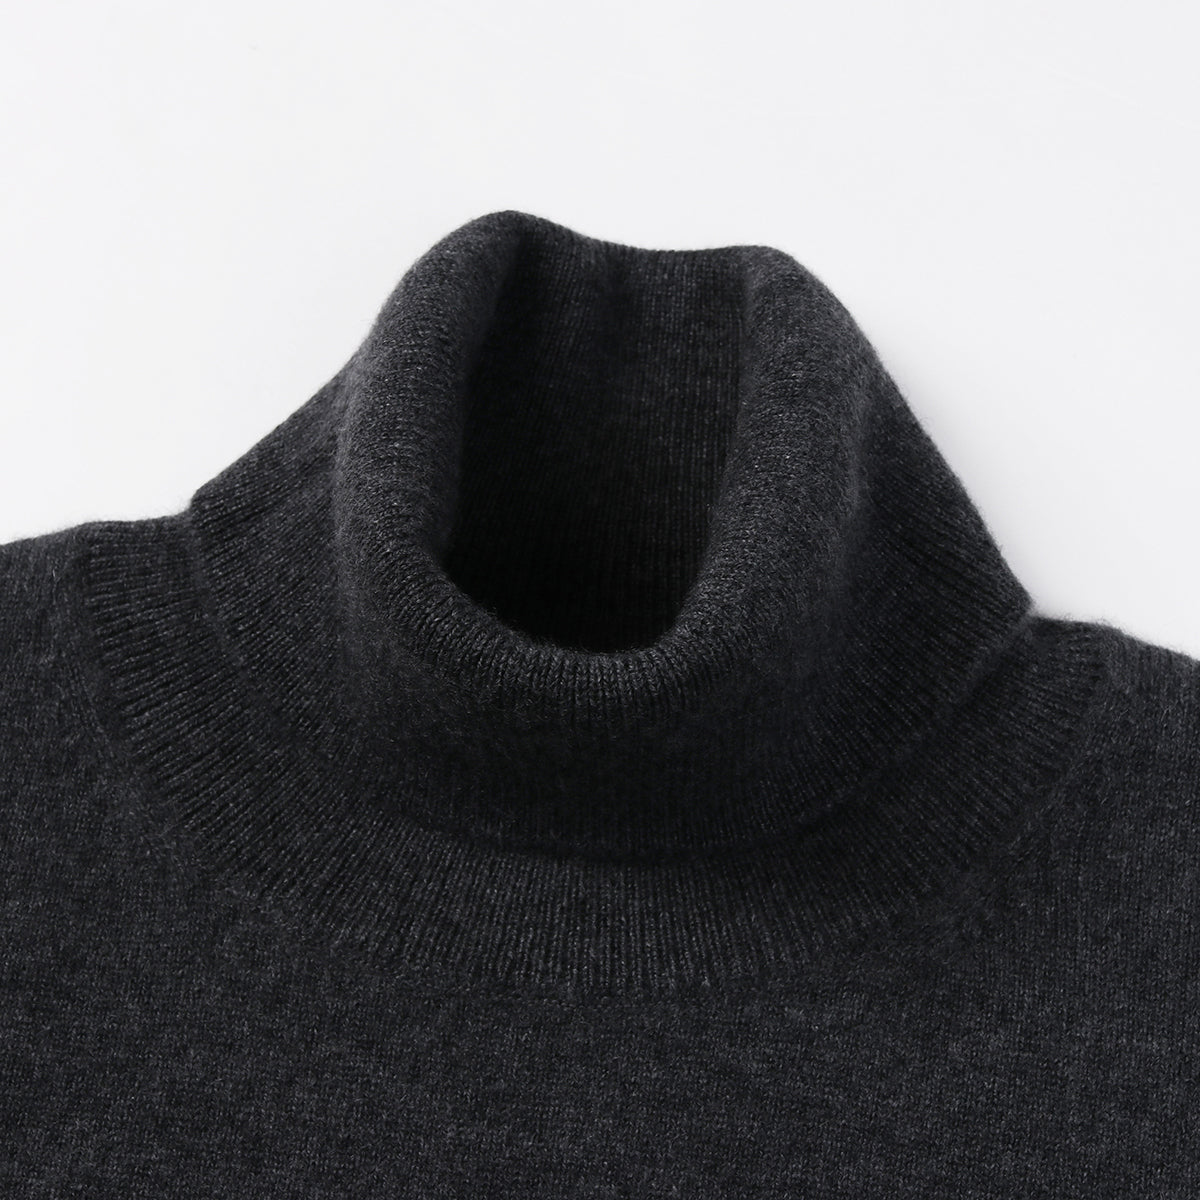 Personalized custom order of men's Japanese luxury baby cashmere knit turtleneck sweater